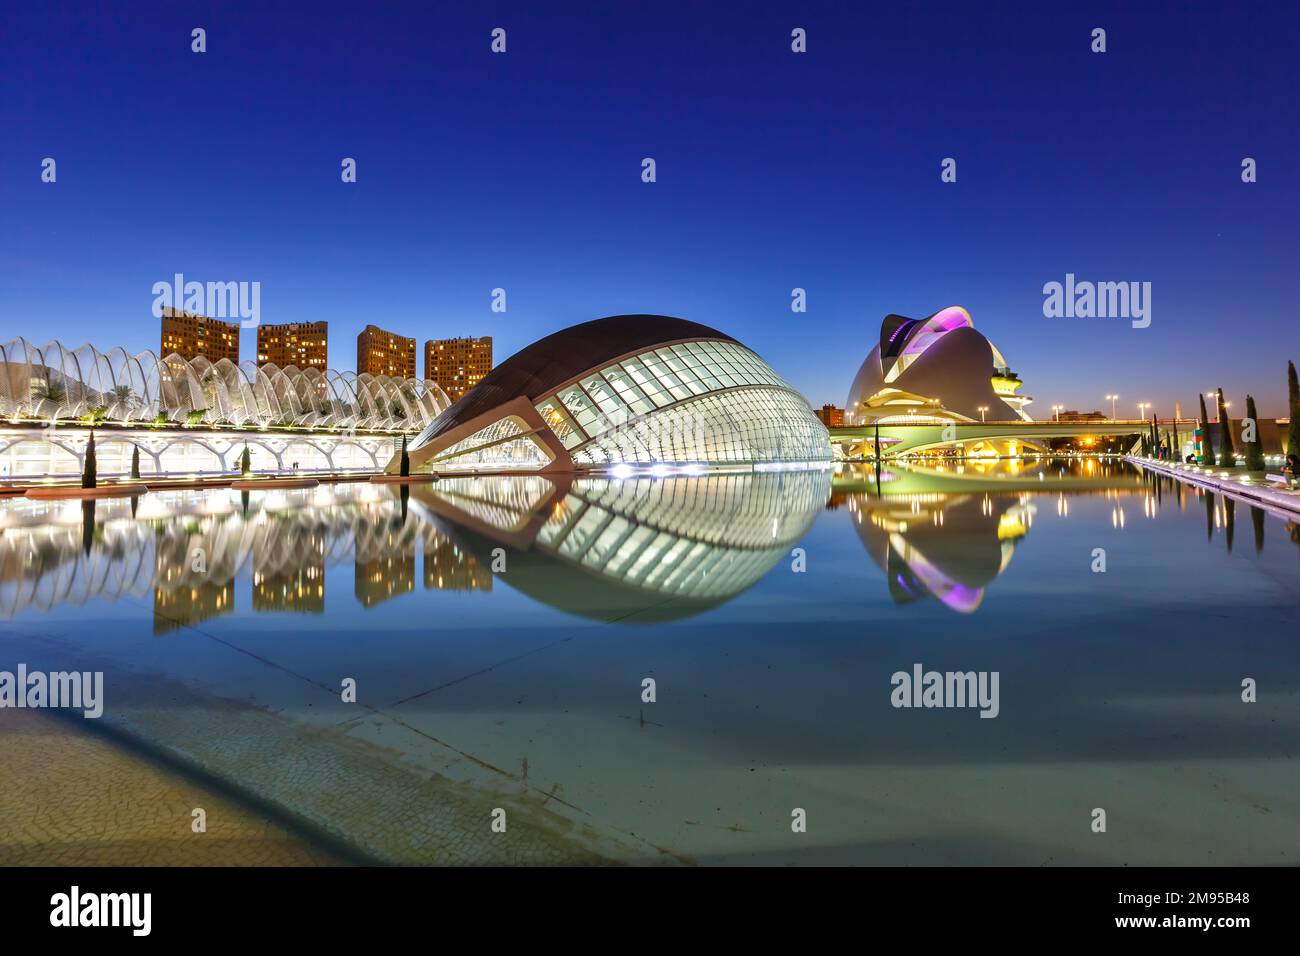 Valencia, Spanien - 17. Februar 2022: Ciutat de les Arts i les Ciencies Moderne Architektur von Santiago Calatrava bei Nacht in Valencia, Spanien. Stockfoto